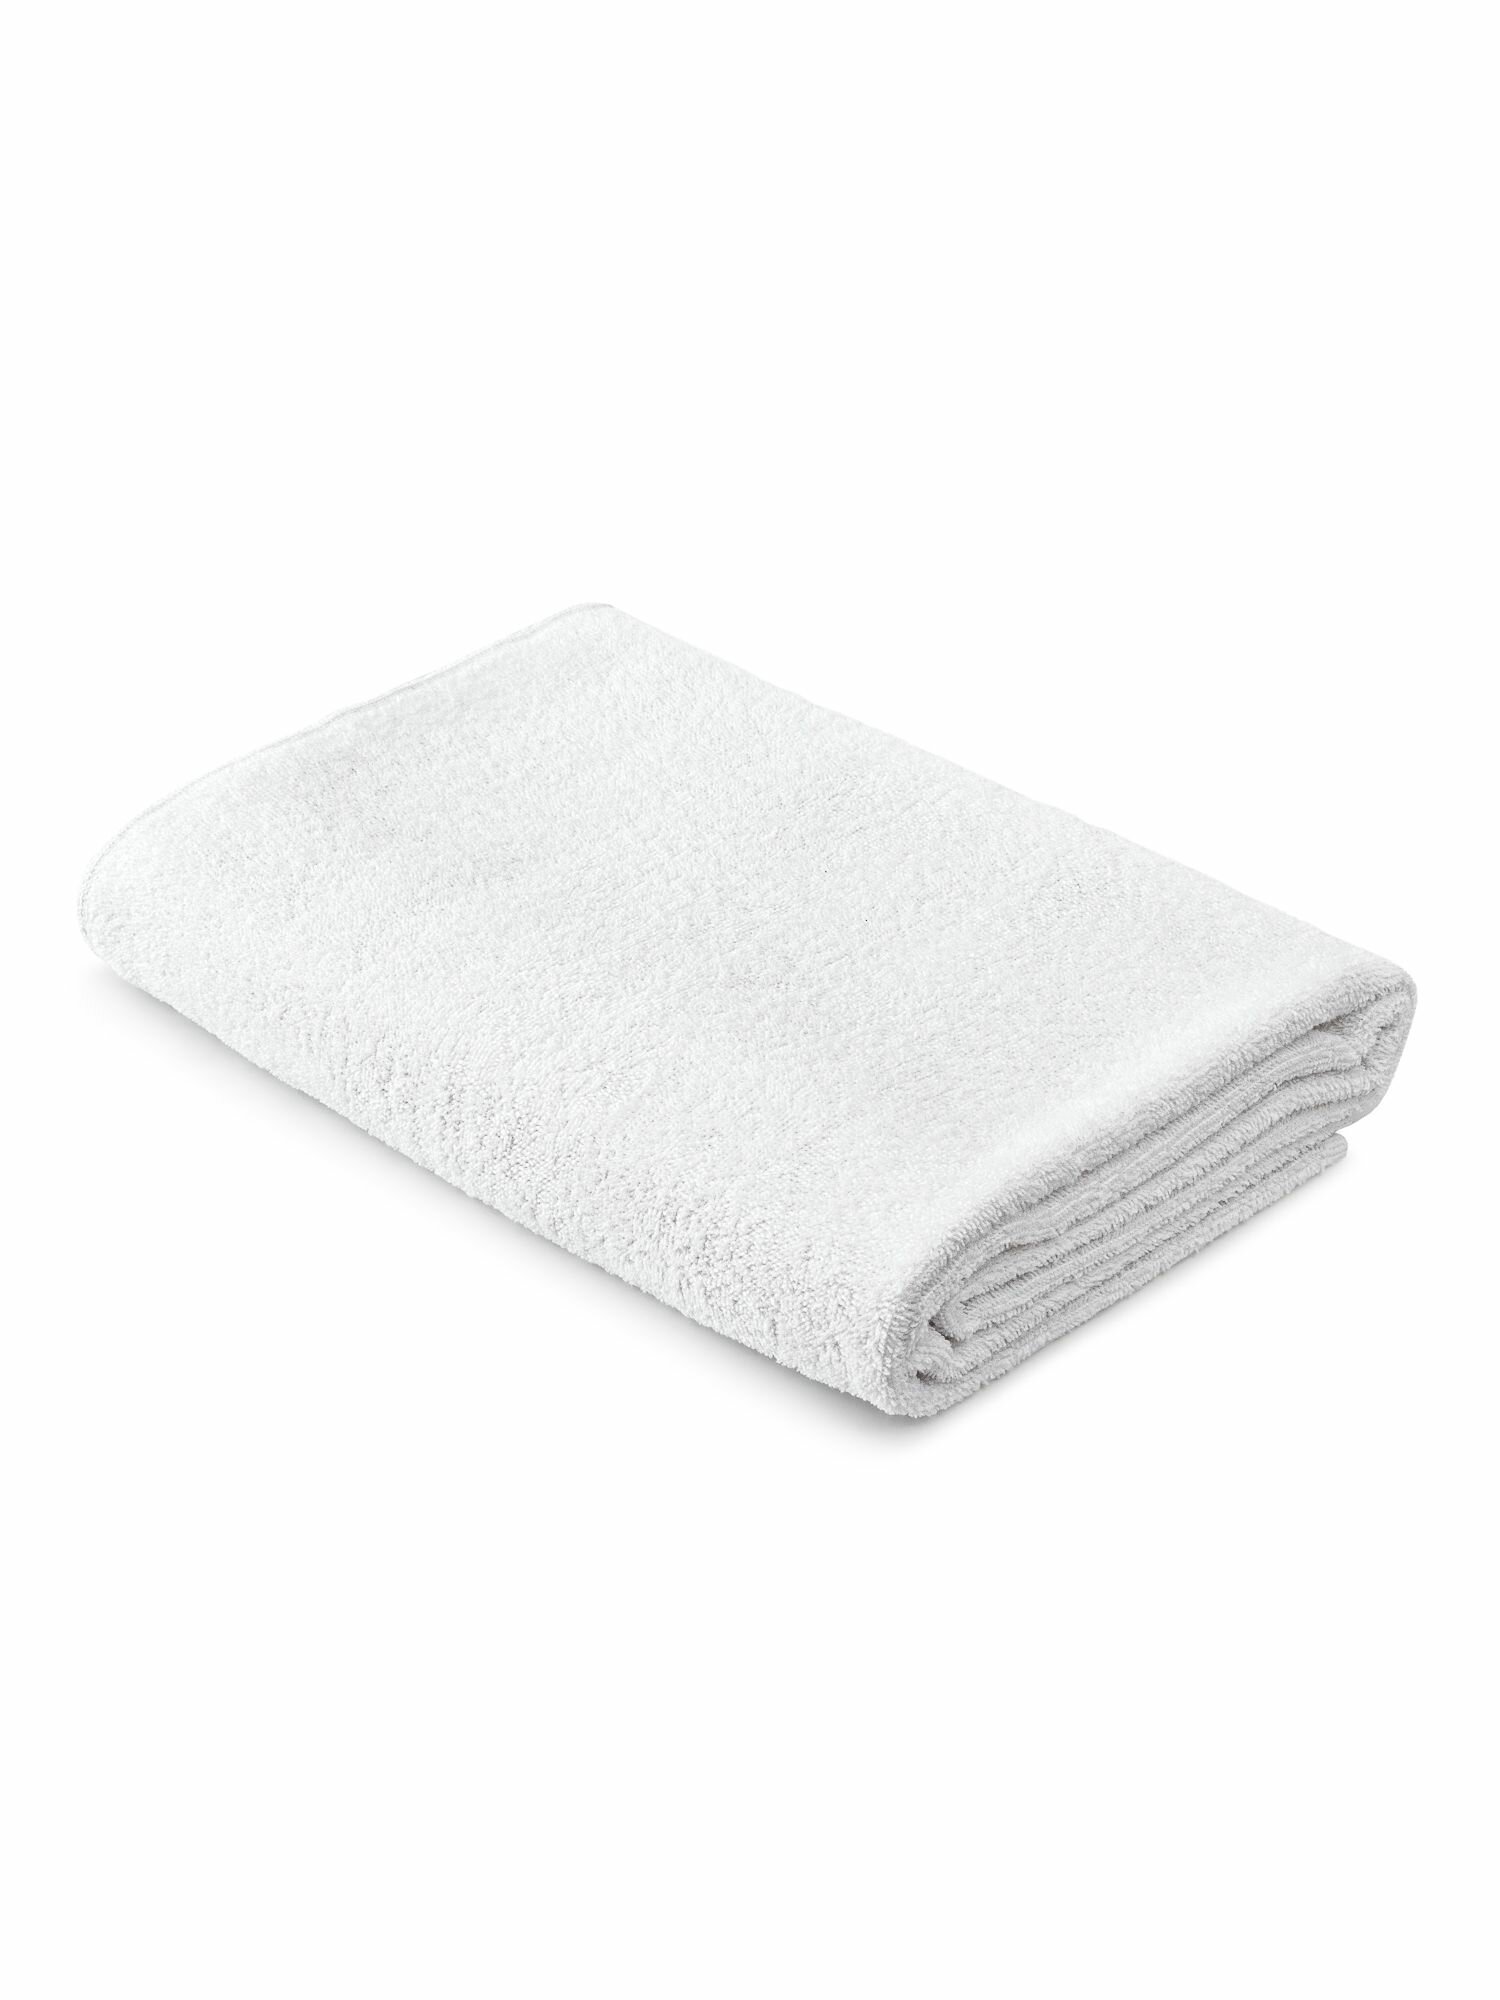 Махровое полотенце 50x70 банное белого цвета TCStyle 1 шт. 430 г/м2